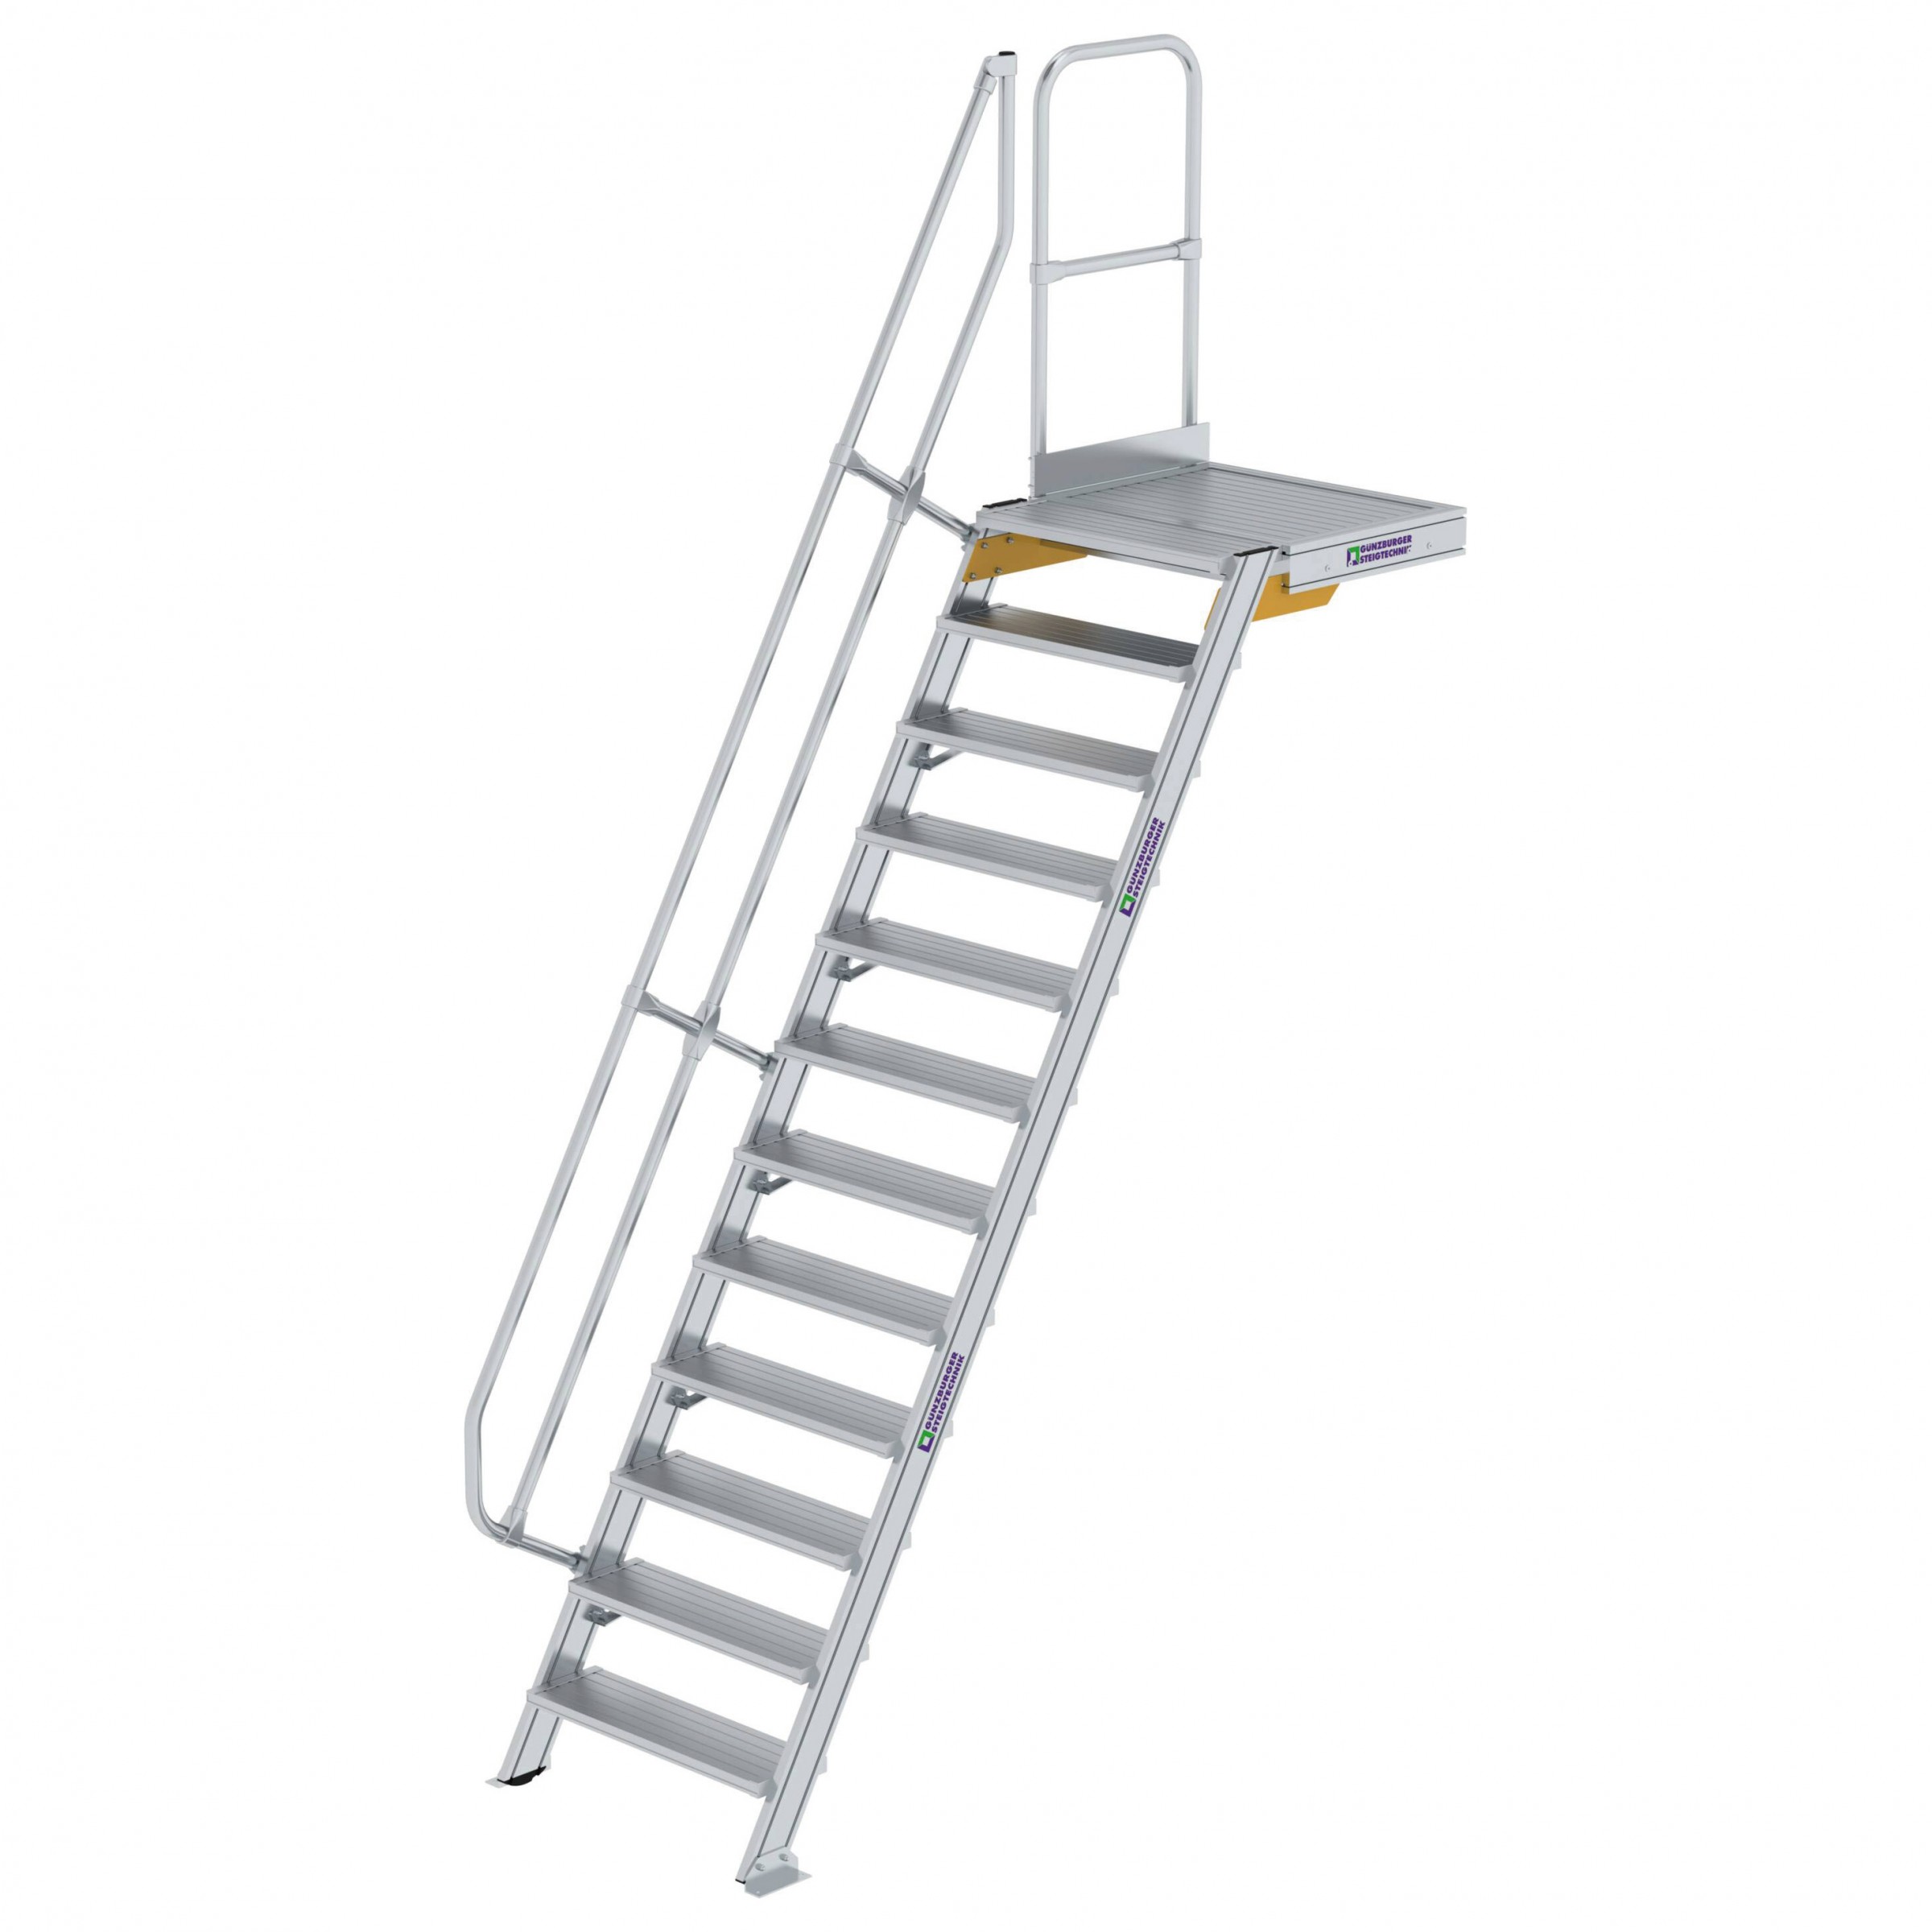 Aluminium-Treppe 60° mit Podest, Stufenbreite 800 mm, 4 Stufen